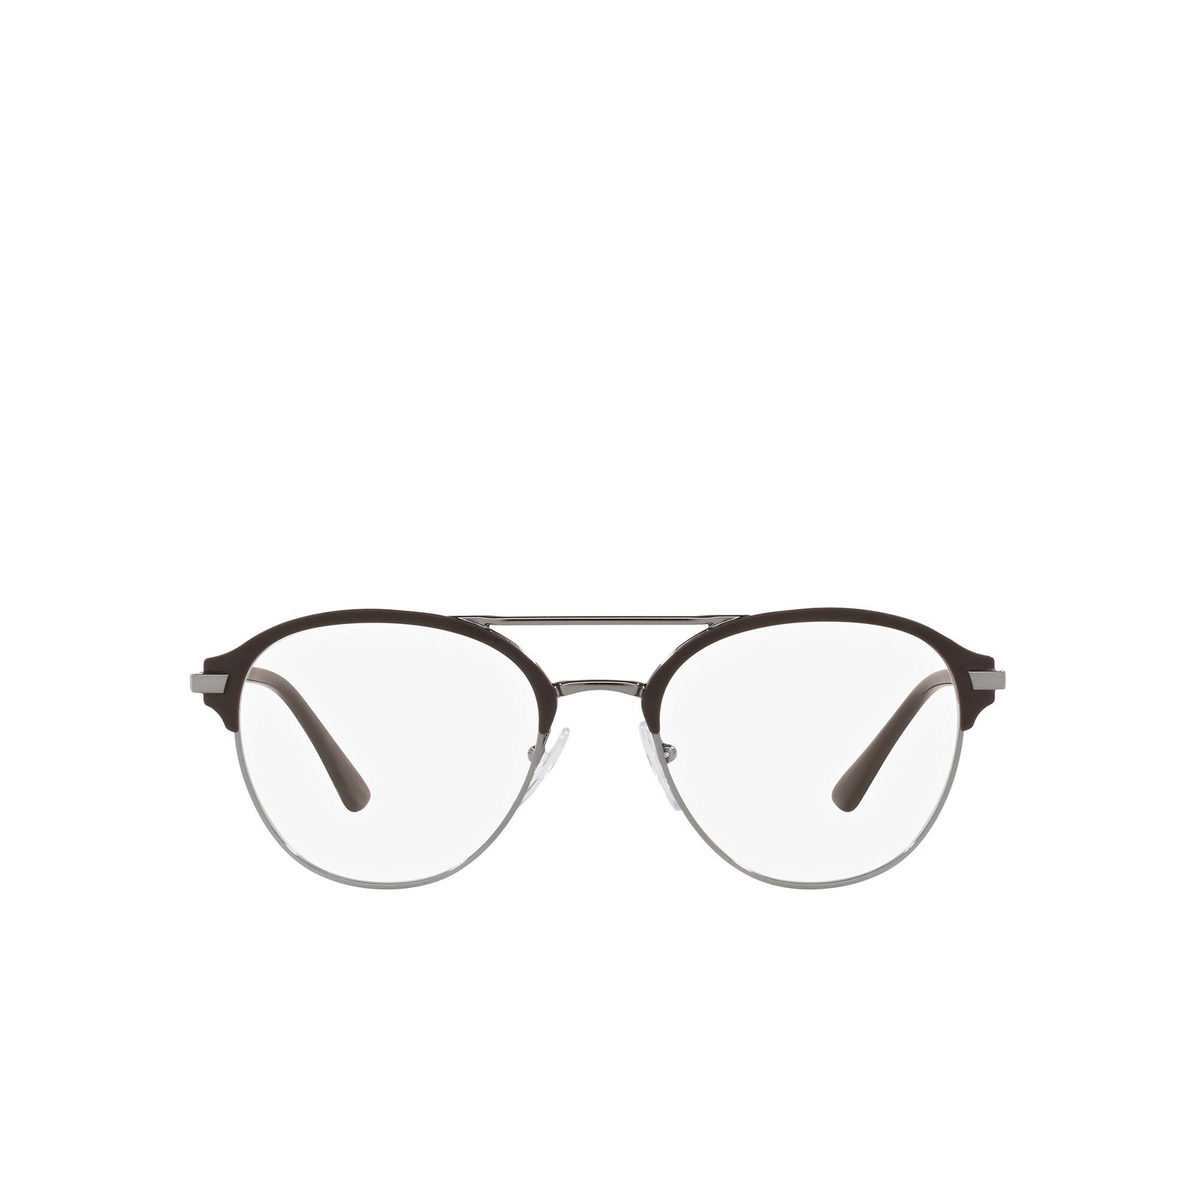 Prada® Aviator Eyeglasses: PR 61WV color Matte Brown / Gunmetal 02Q1O1 - front view.